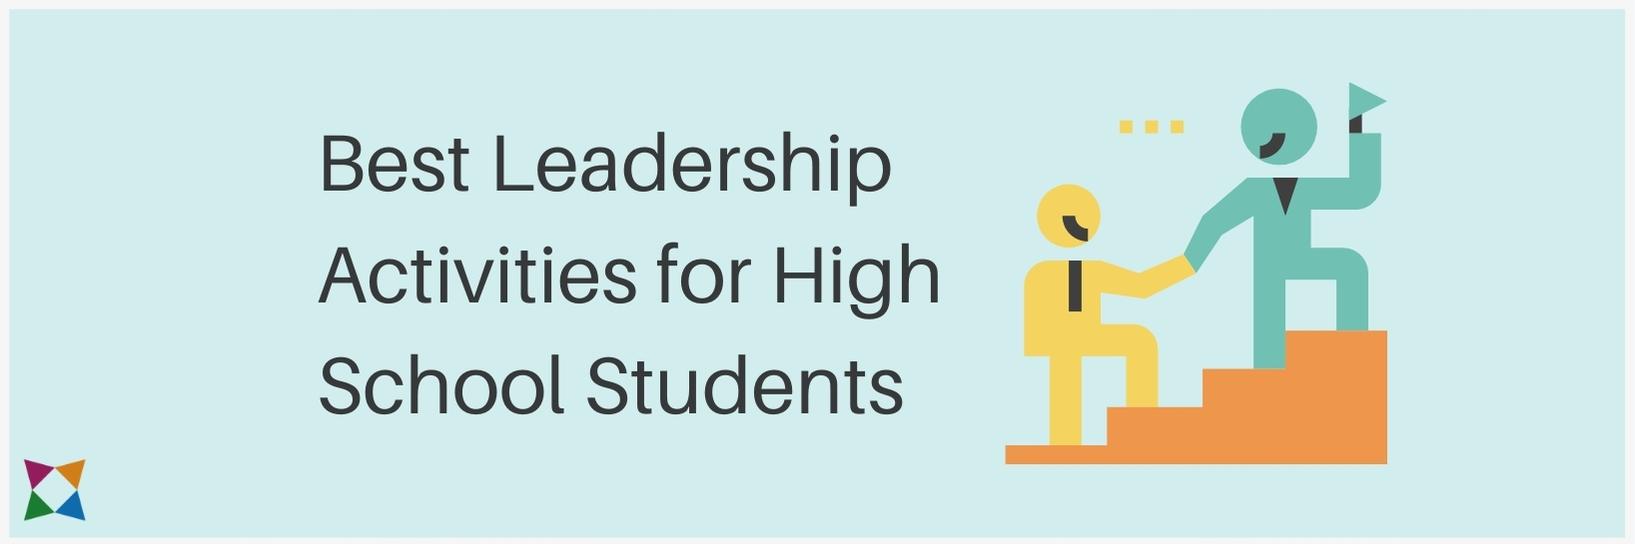 4 Best Leadership Activities for High School Students